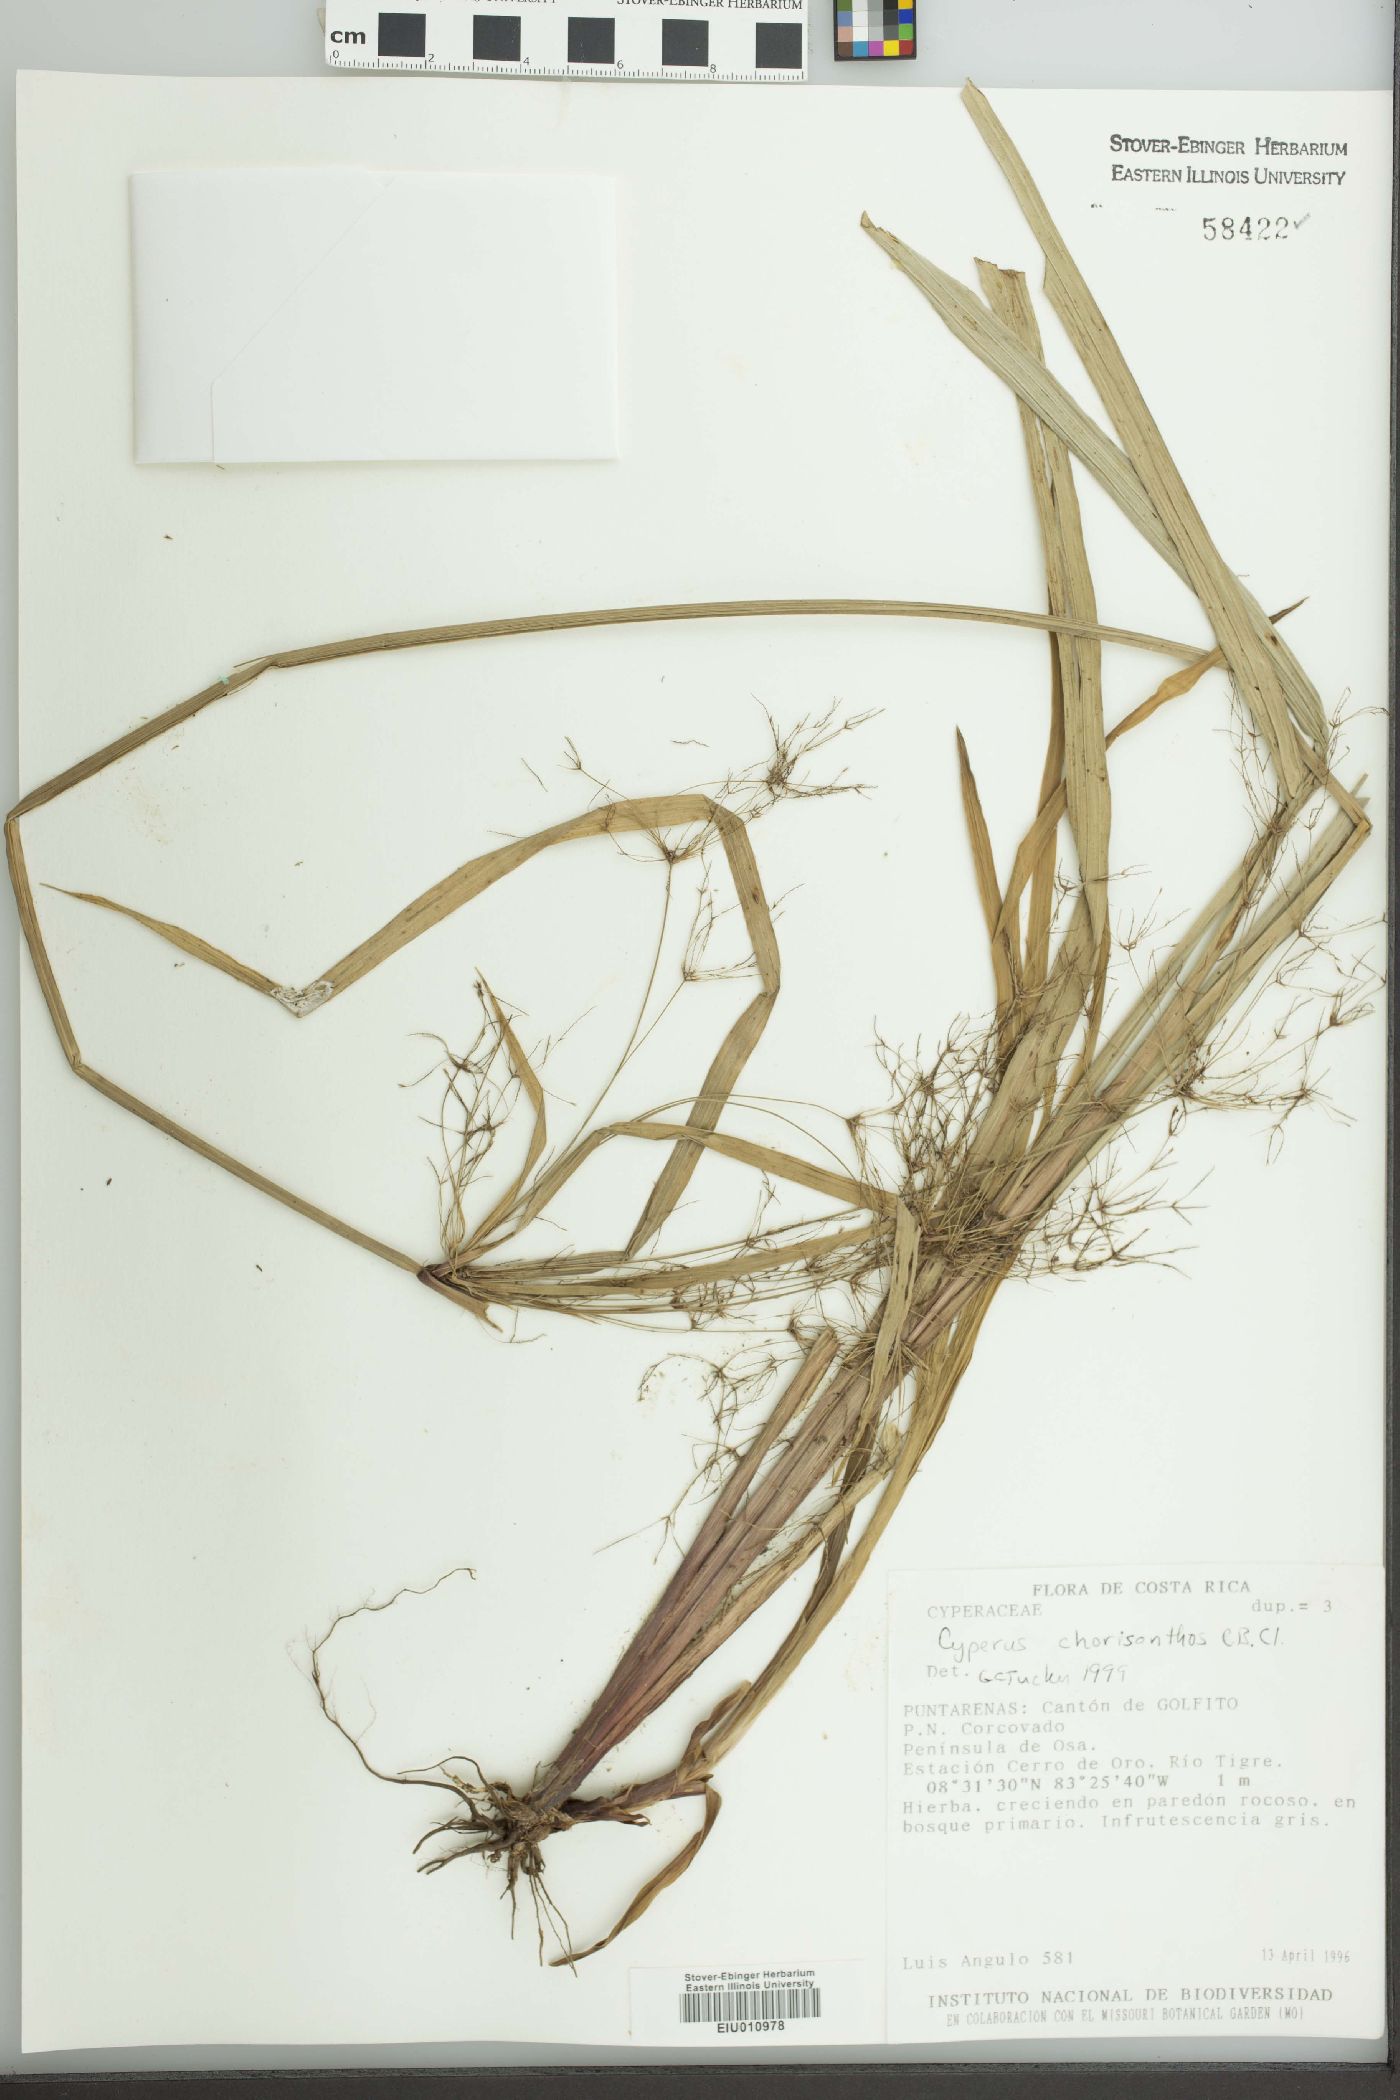 Cyperus chorisanthos image